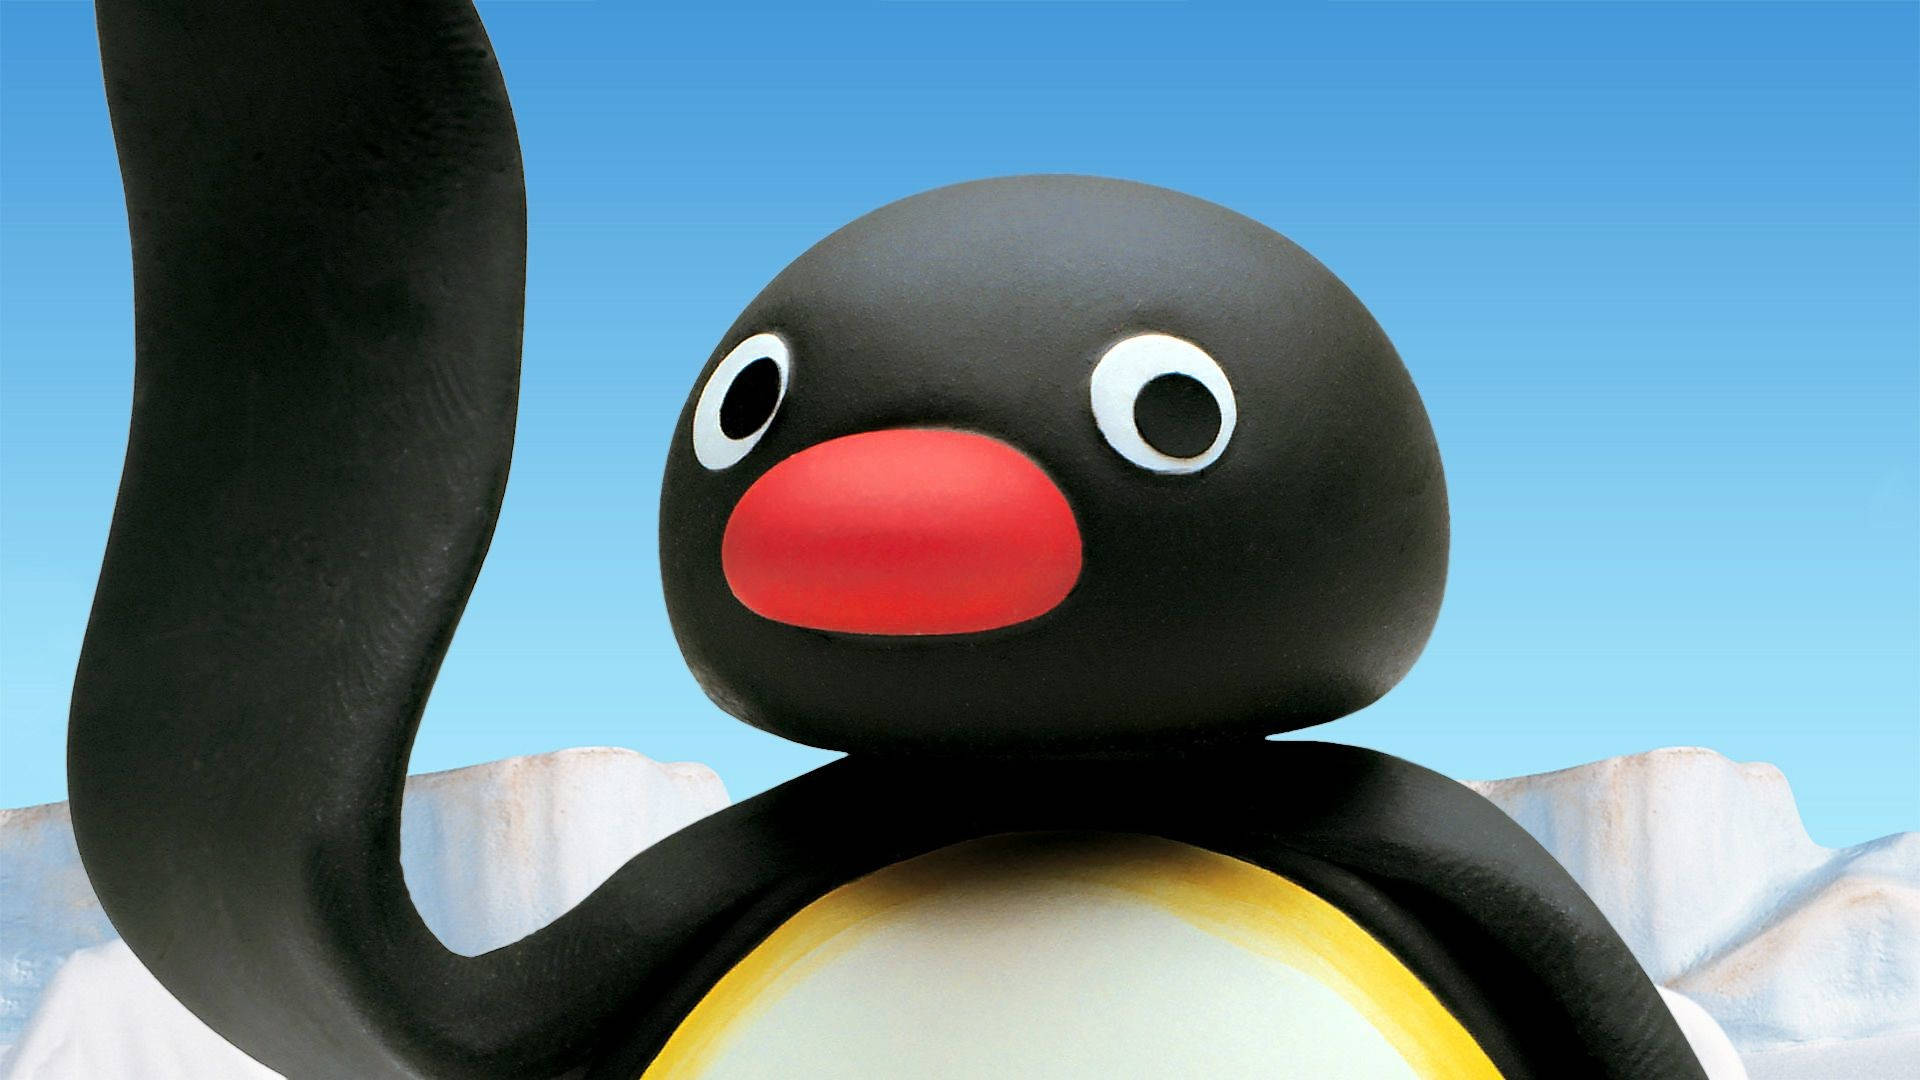 Free Pingu Wallpaper Downloads, Pingu Wallpaper for FREE